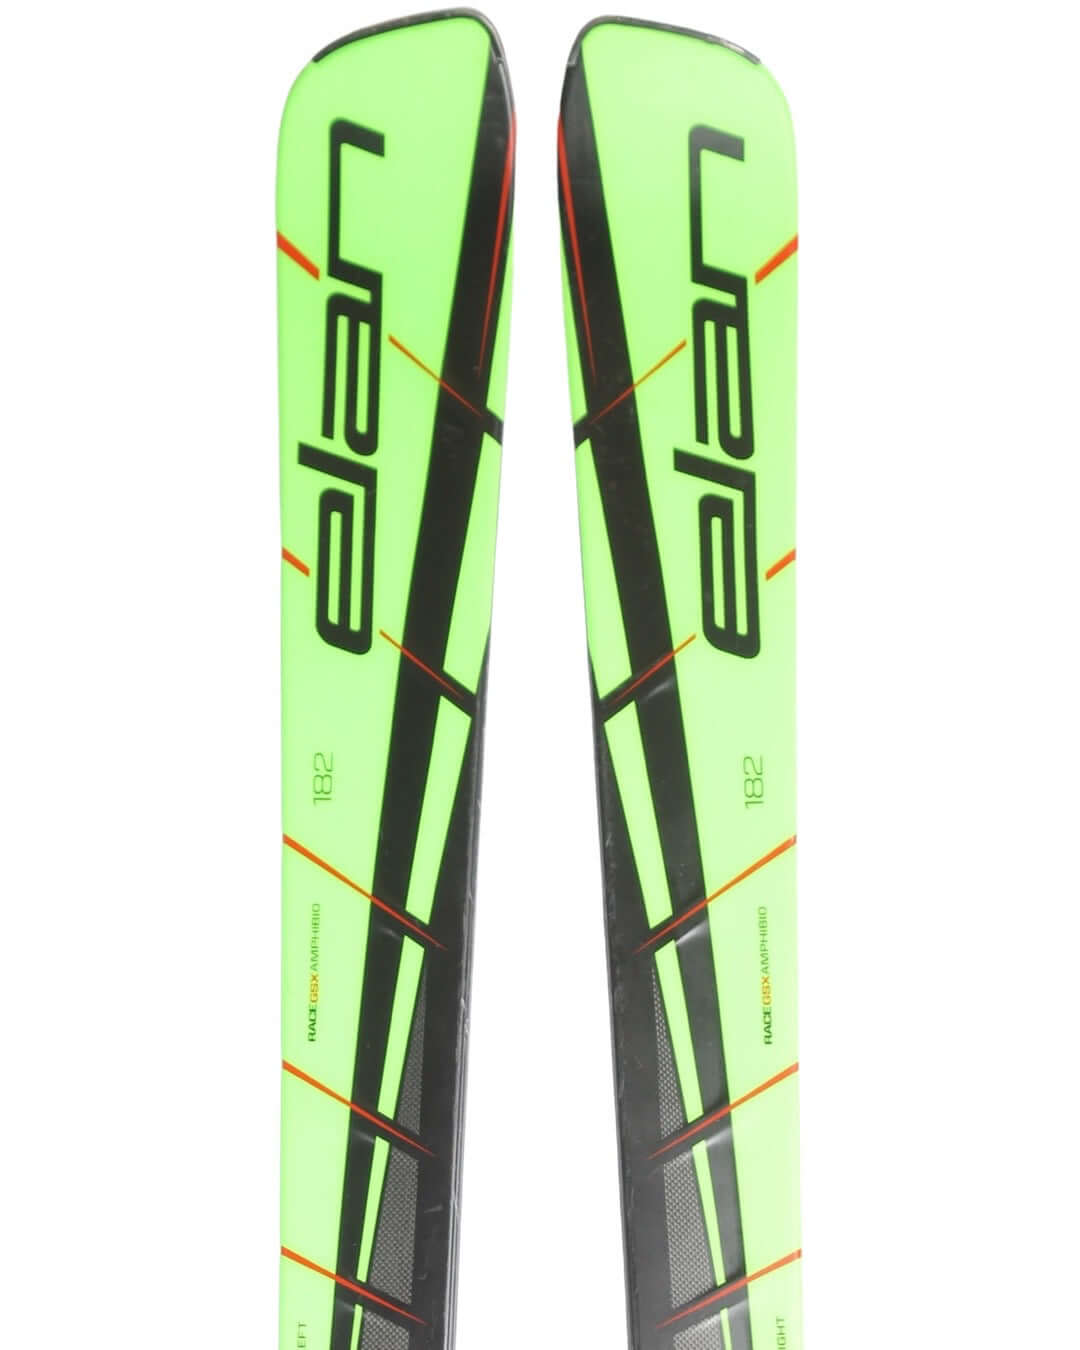 Ski - Elan GSX Race 2016 - 2399 kr